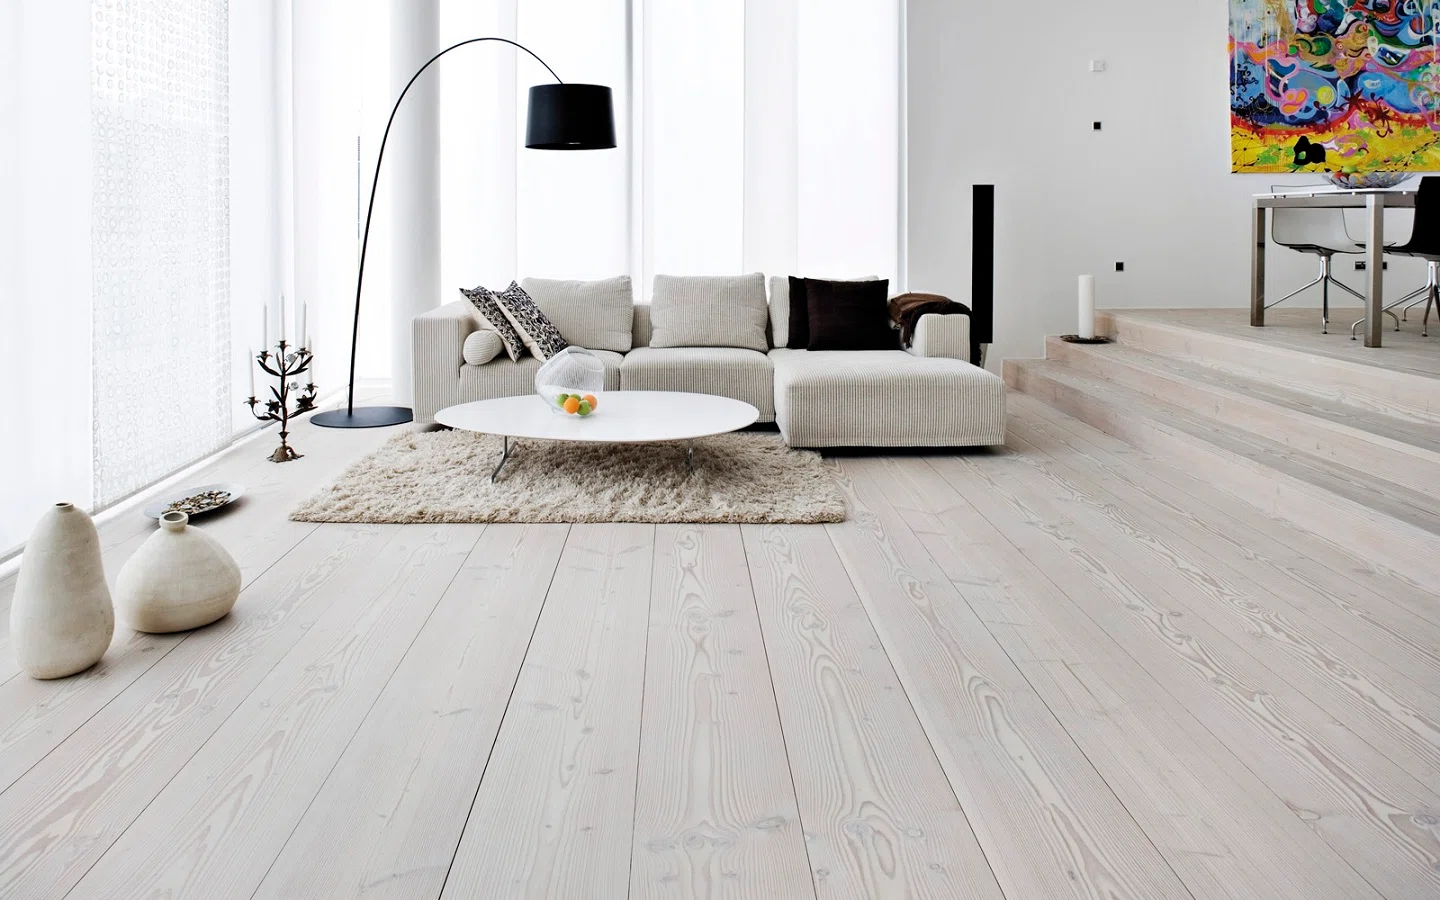 Is oak a good wood flooring?